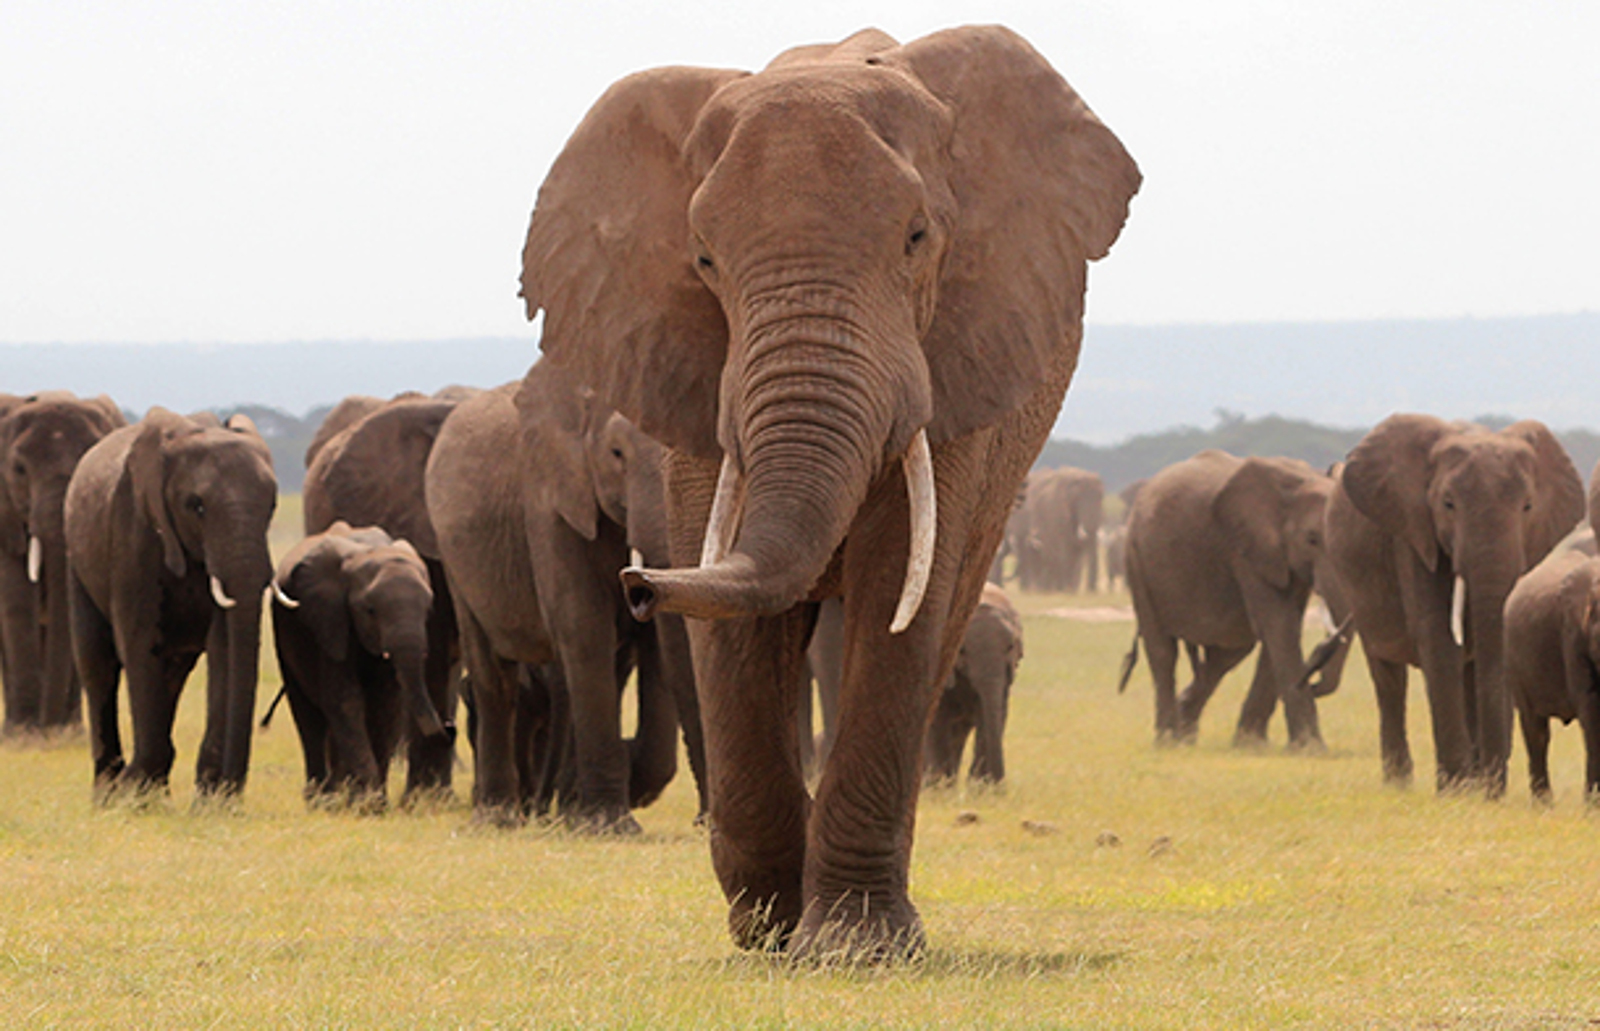 How Habitat Loss Puts Endangered Elephants at Risk of Human Conflict